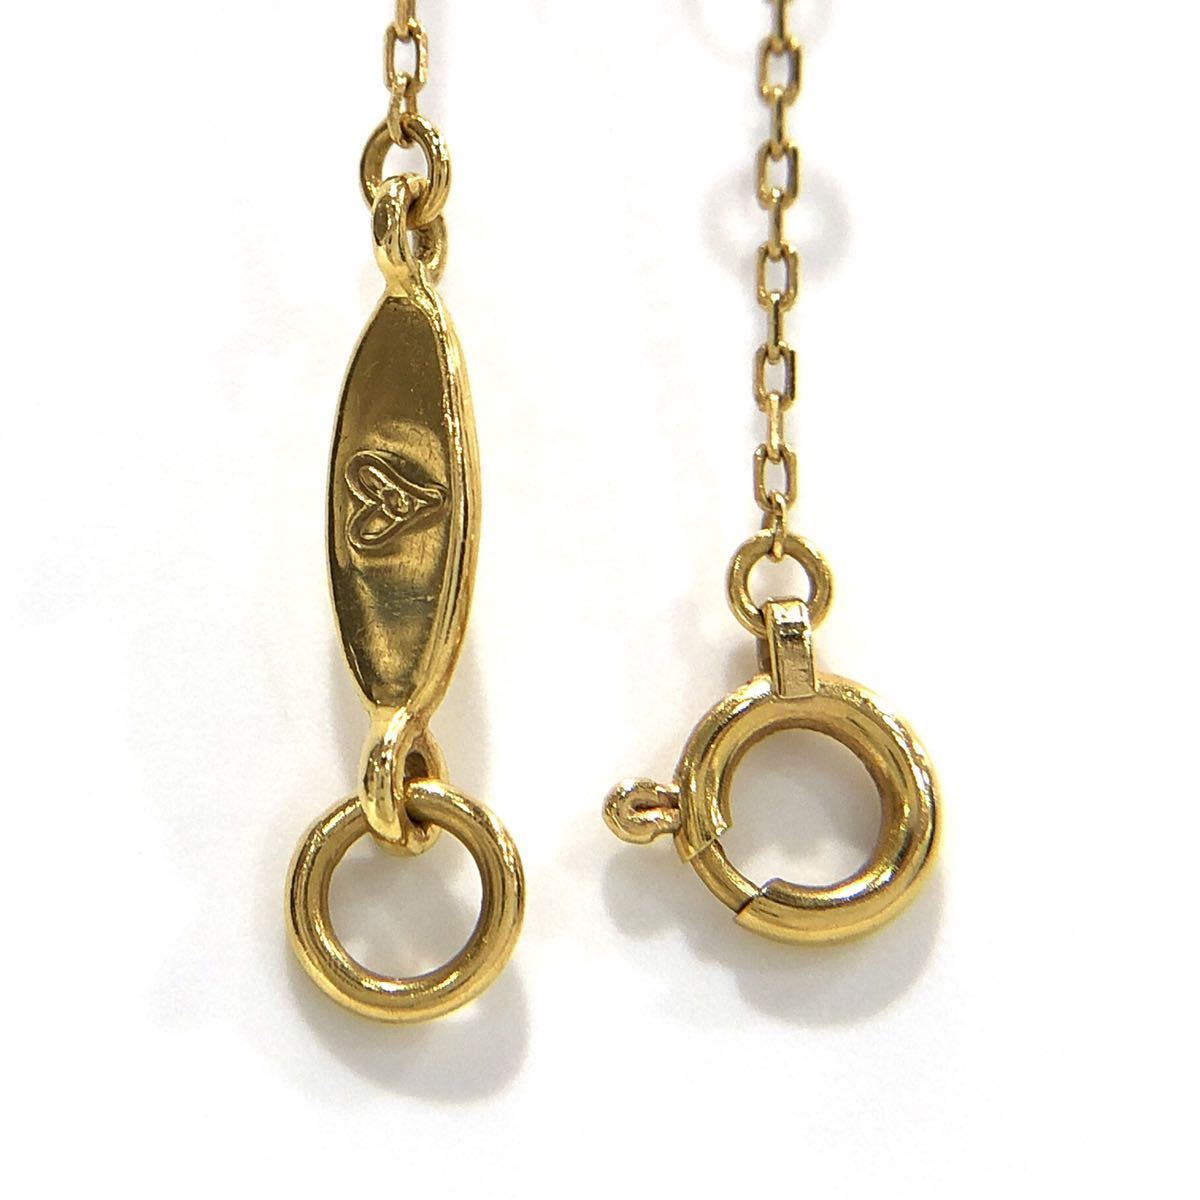 AHKAH Ahkah pavepaveVC0040010100 initial A necklace K18 yellow gold diamond 0.07ct lady's free shipping 